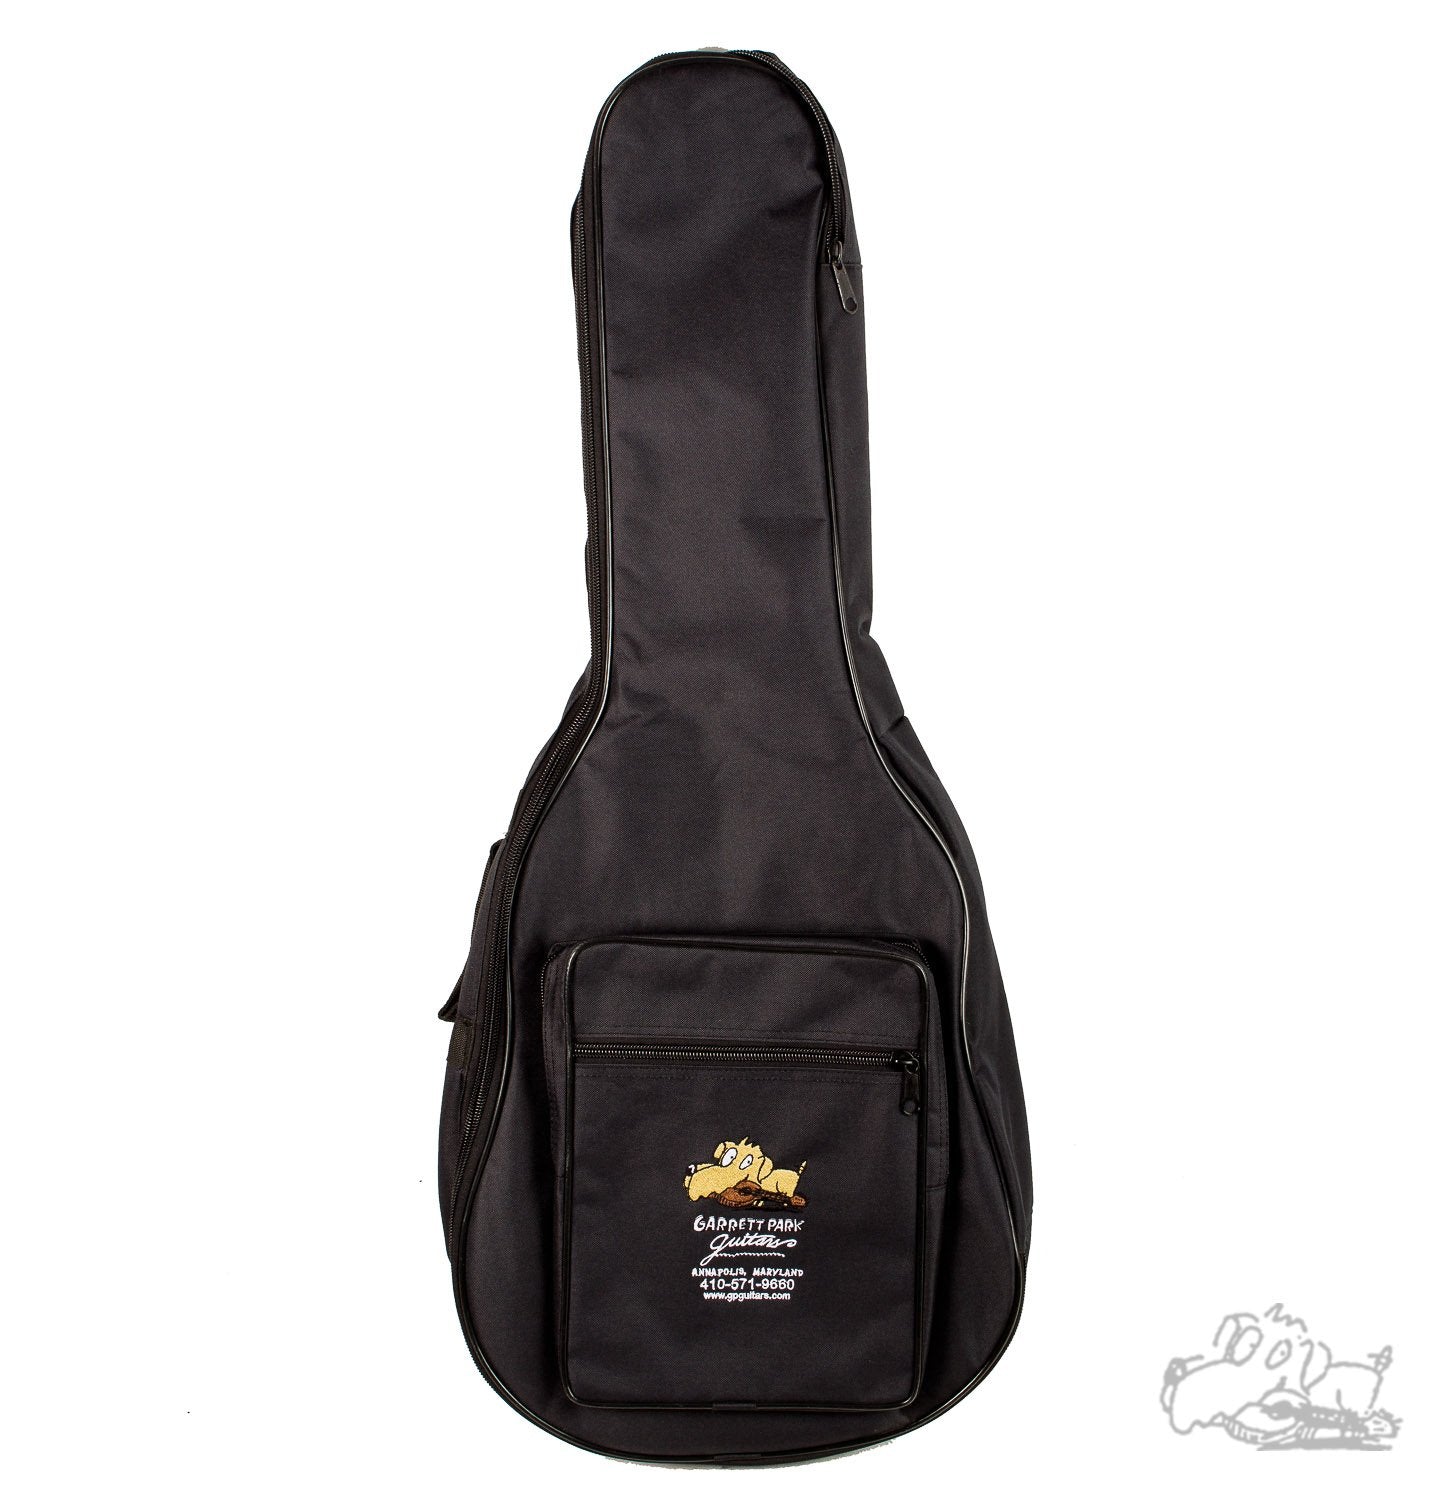 Garrett Park Guitars Embroidered Standard Classical Guitar Nylon Soft Case Gig Bag